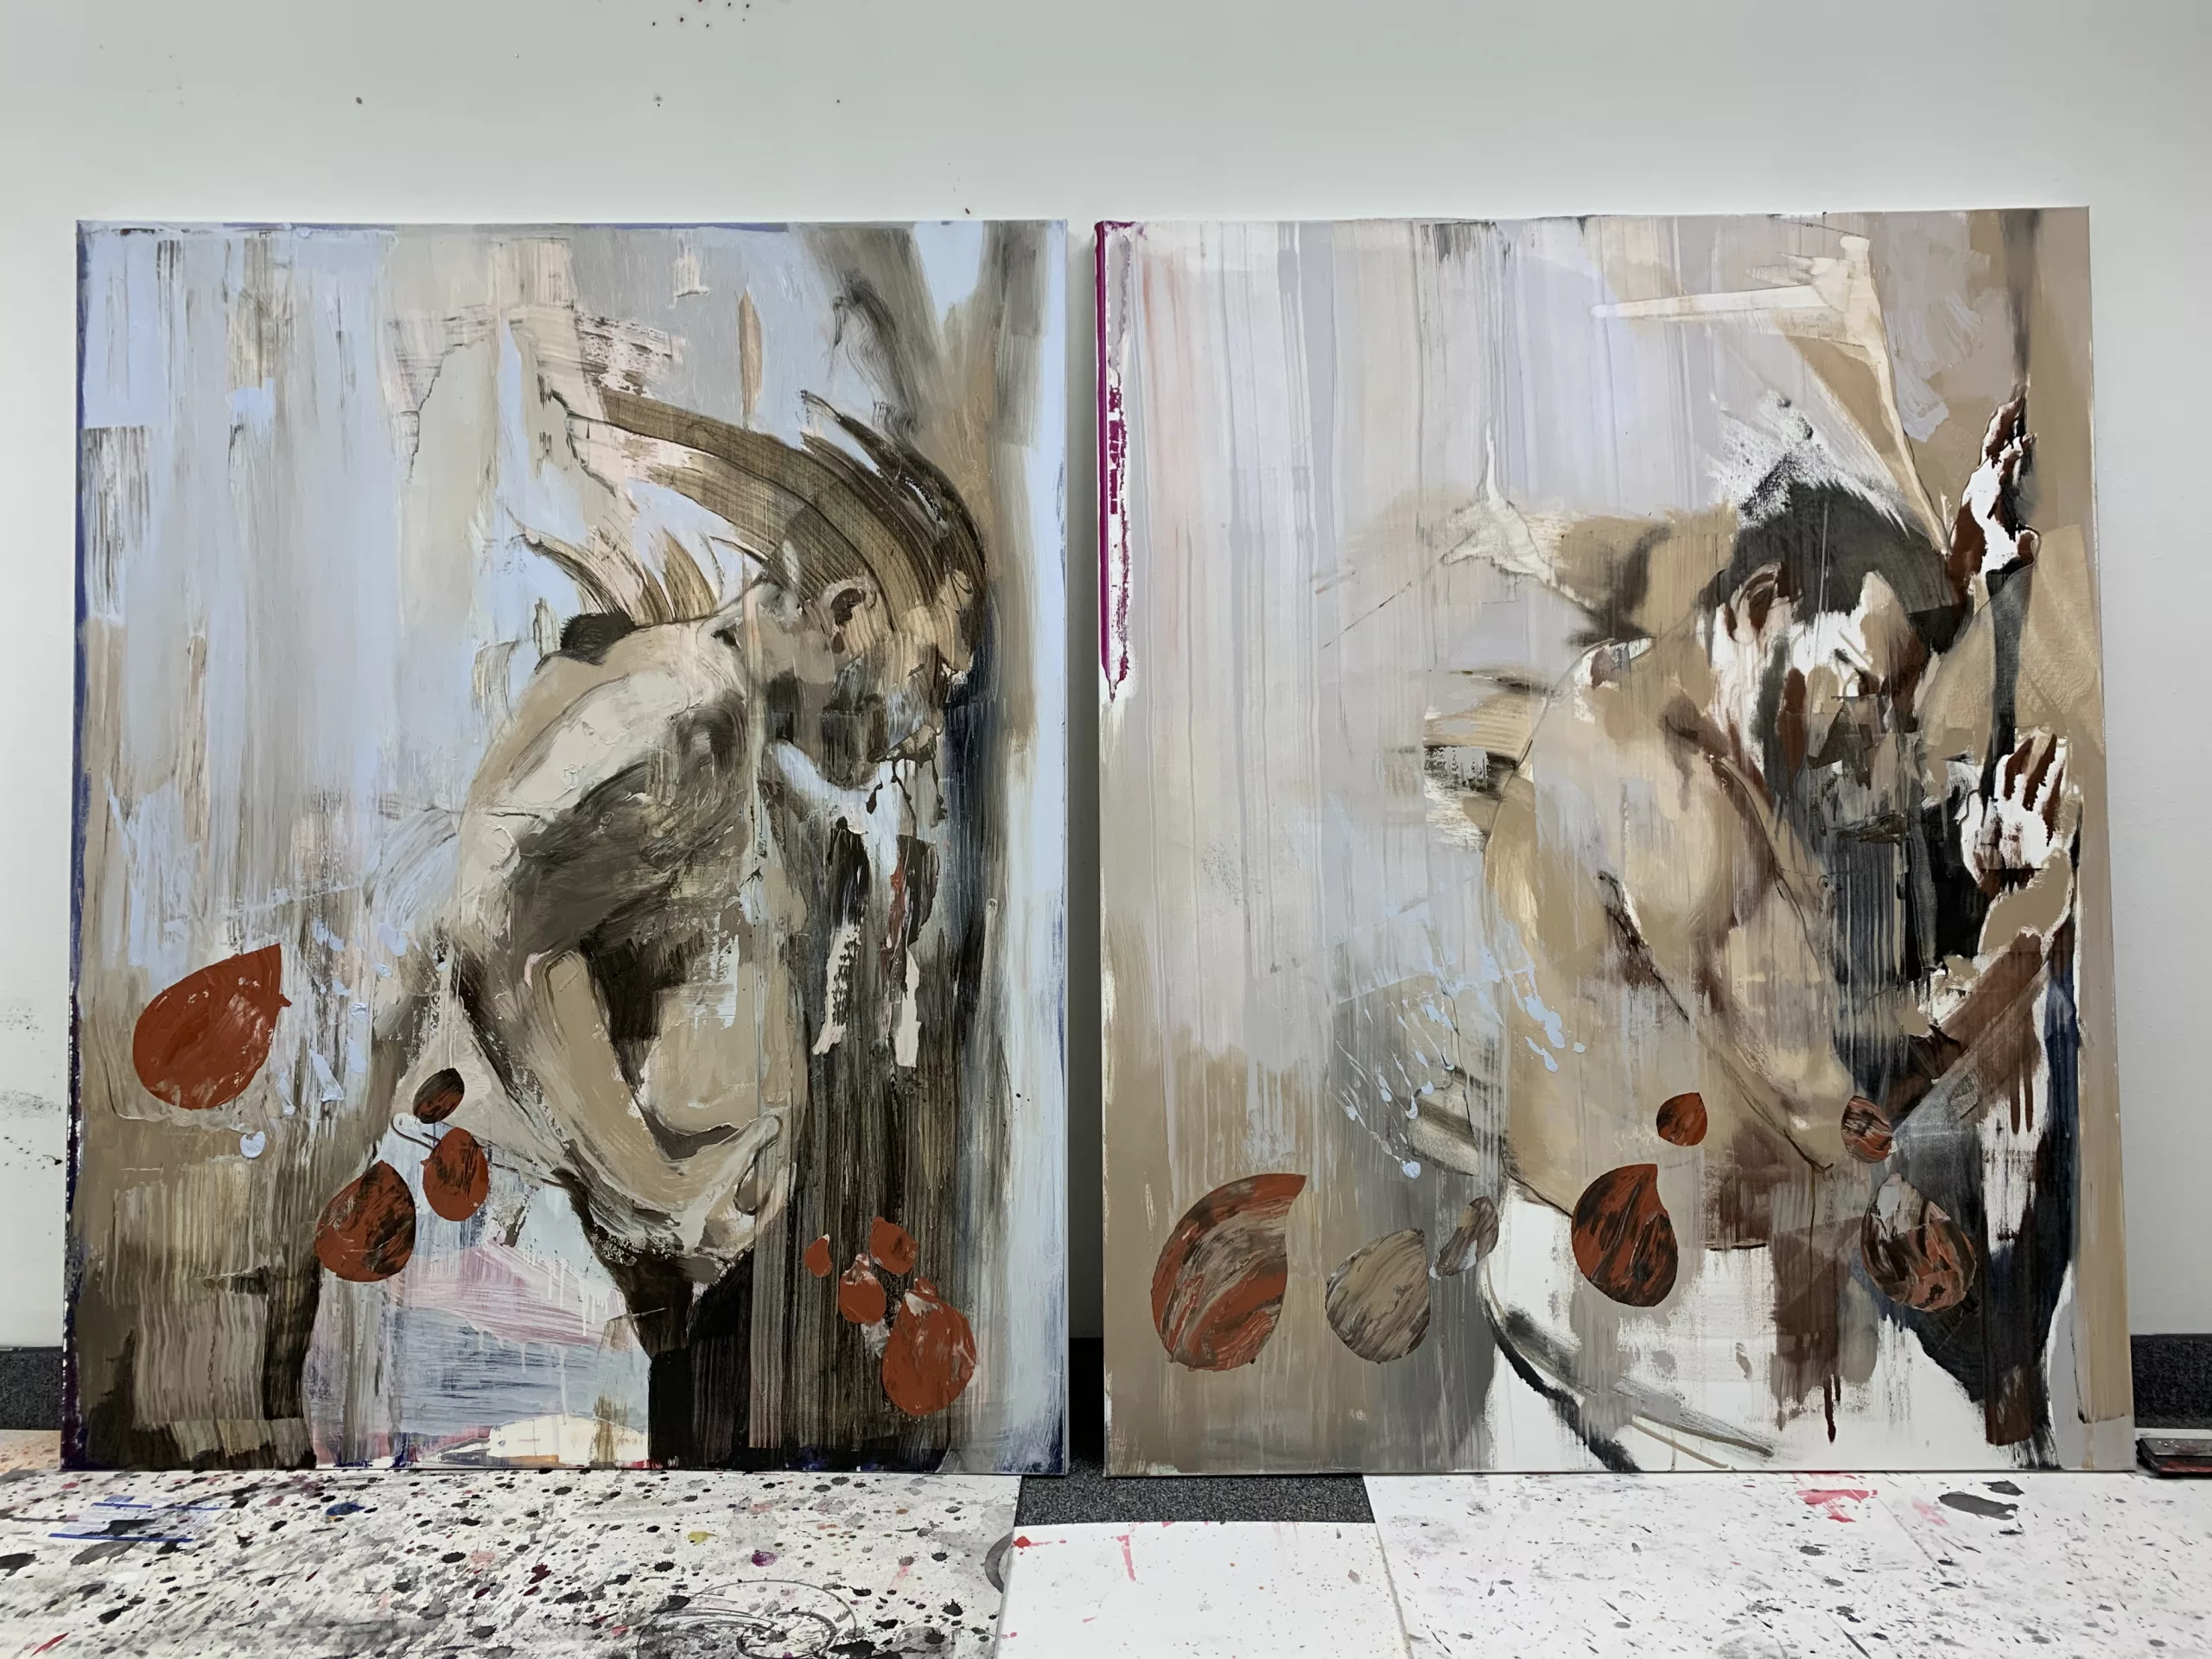 Two Figurative Oil Paintings in Progress 1